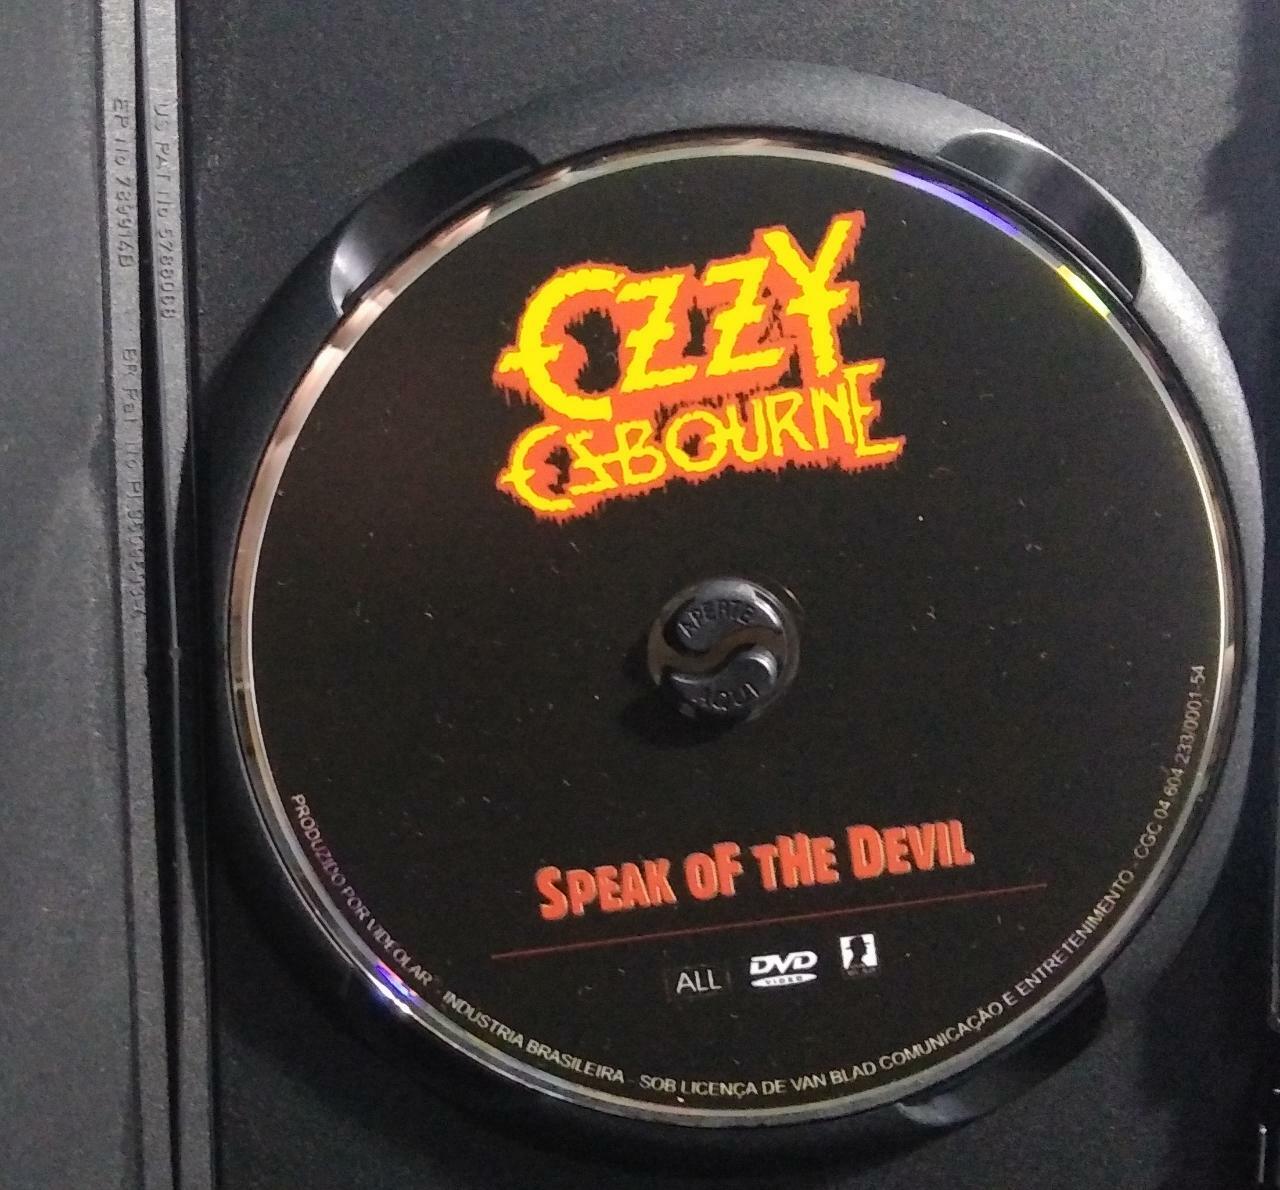 DVD - Ozzy Osbourne - Speak of the Devil